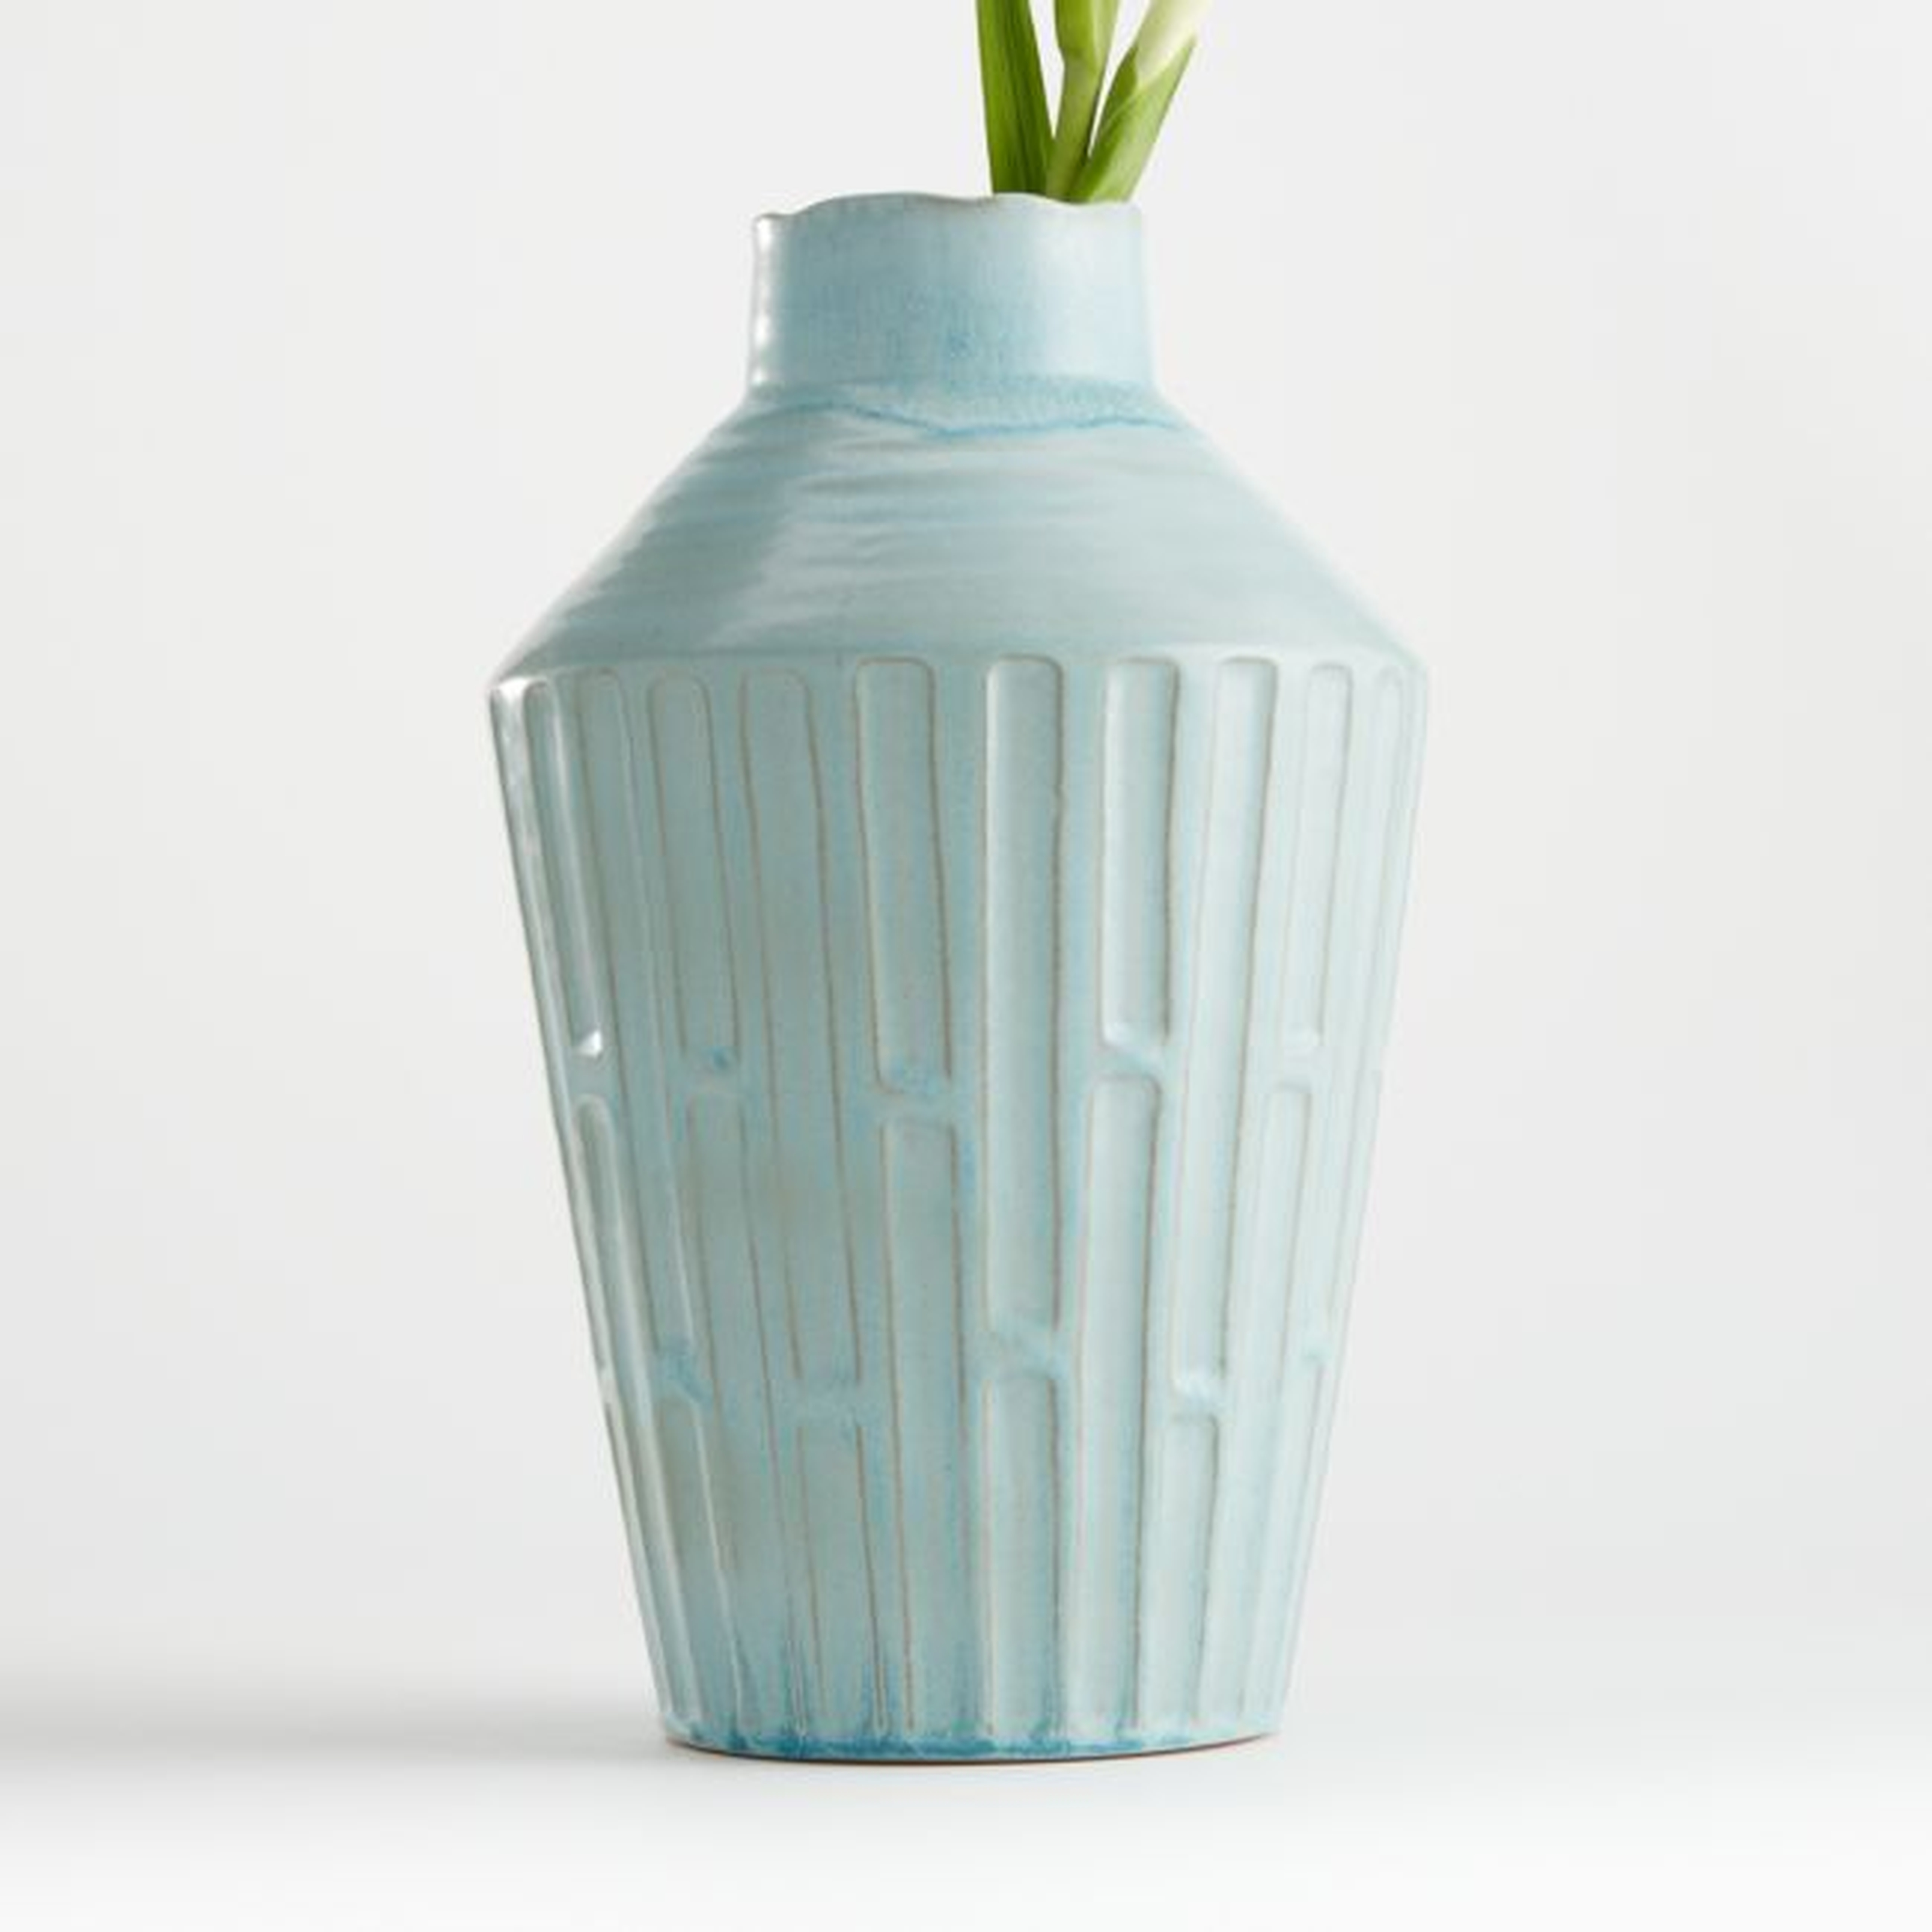 Izma Angled Seafoam Vase - Crate and Barrel